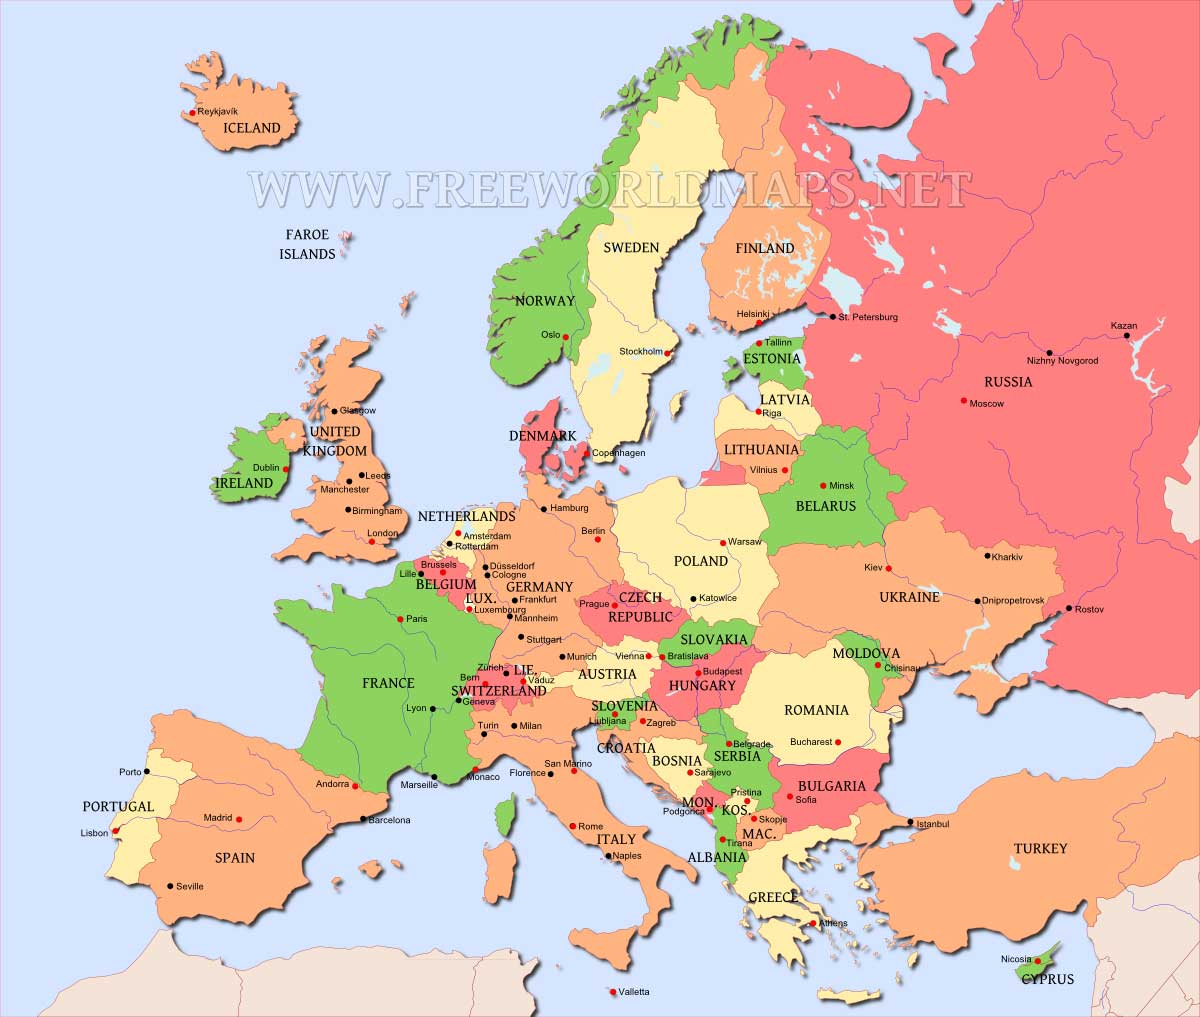 Europe on a Chromebook